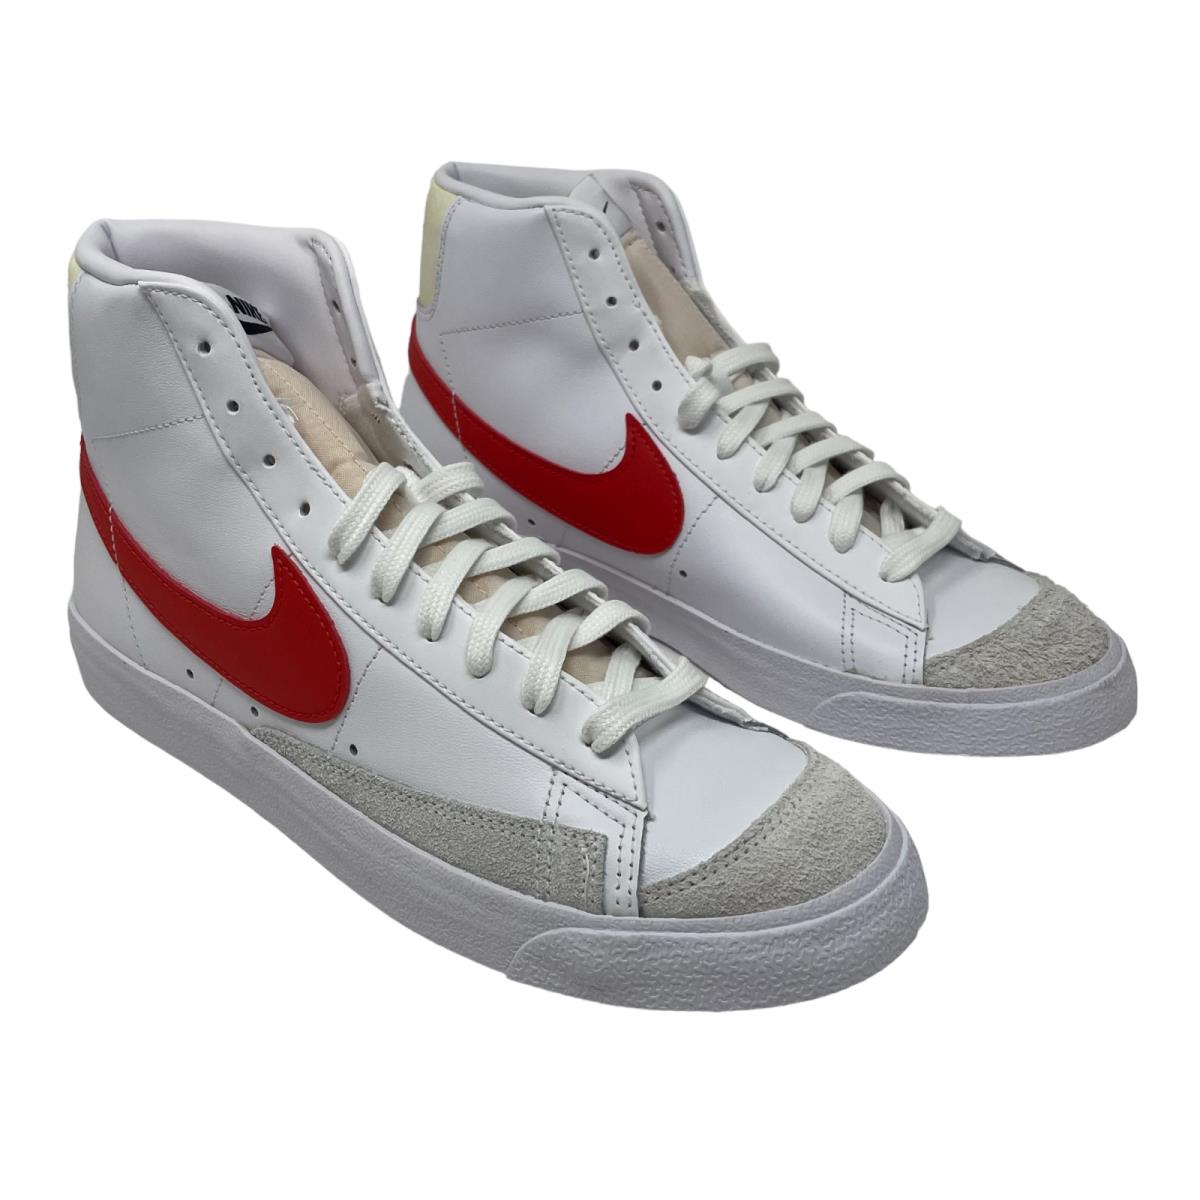 Nike Blazer Mid `77 Vntg White/red Sneakers Size 10.5 M 12 F - White